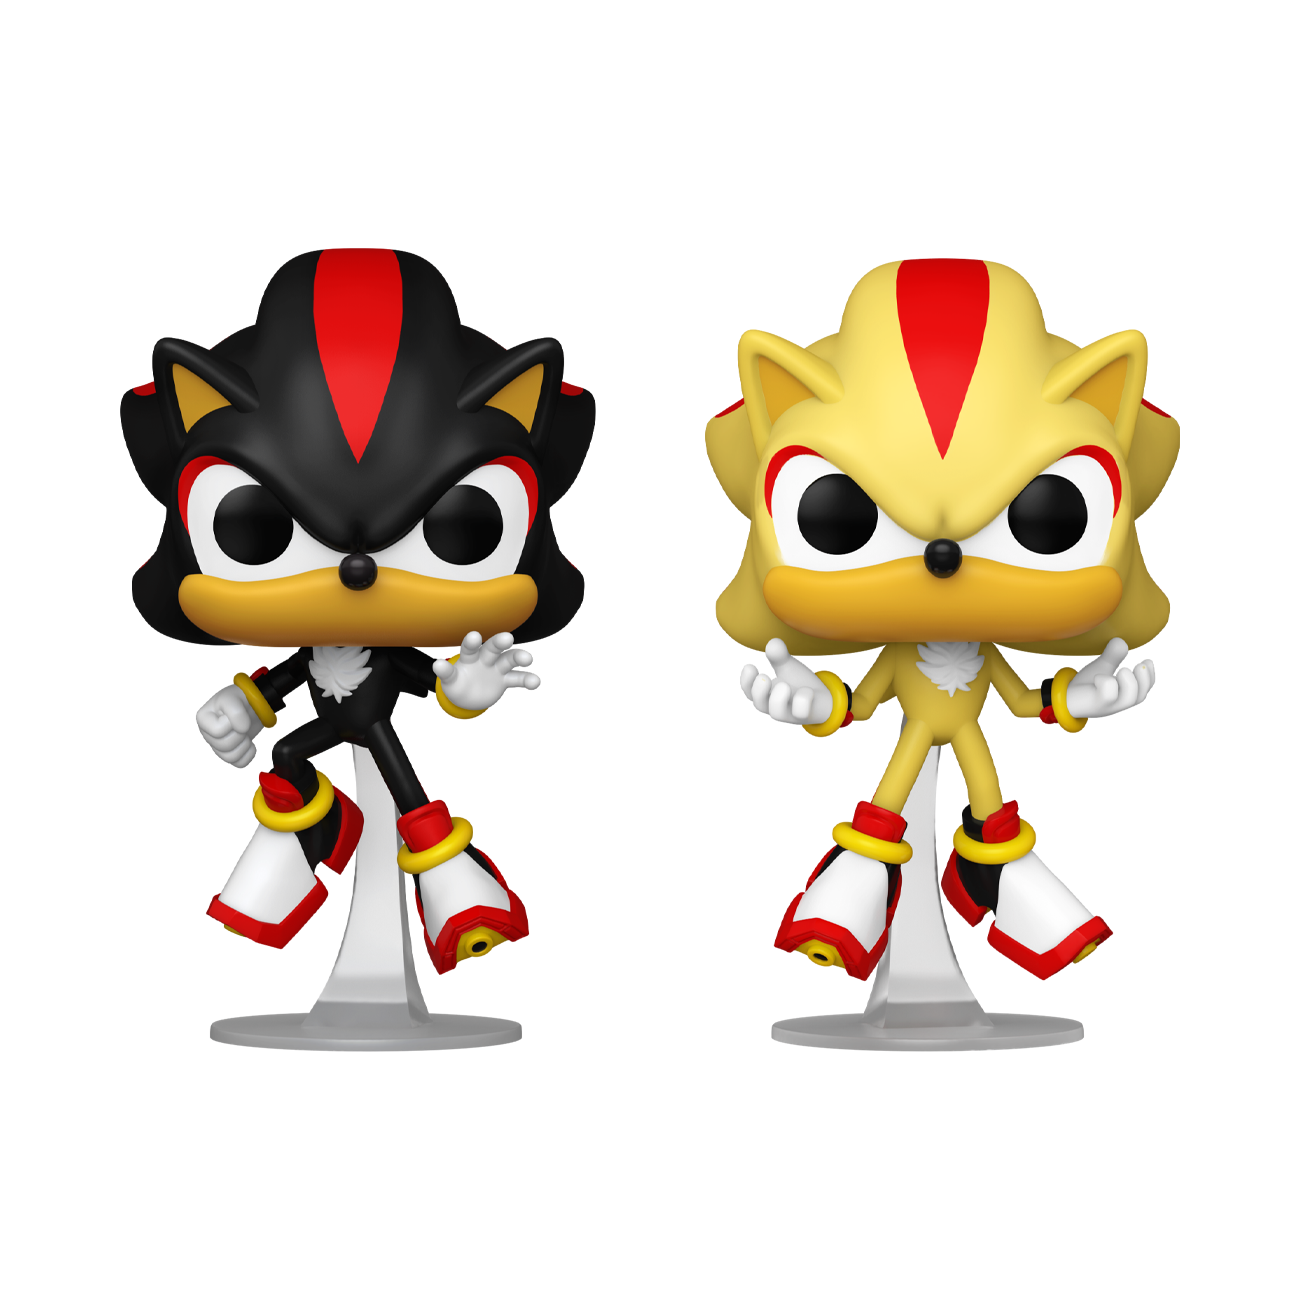 Funko POP! Games: Sonic the Hedgehog - Shadow and Super Shadow 4.75-in  Glow-in-the-Dark Vinyl Figure Set (2-Pack) GameStop Exclusive